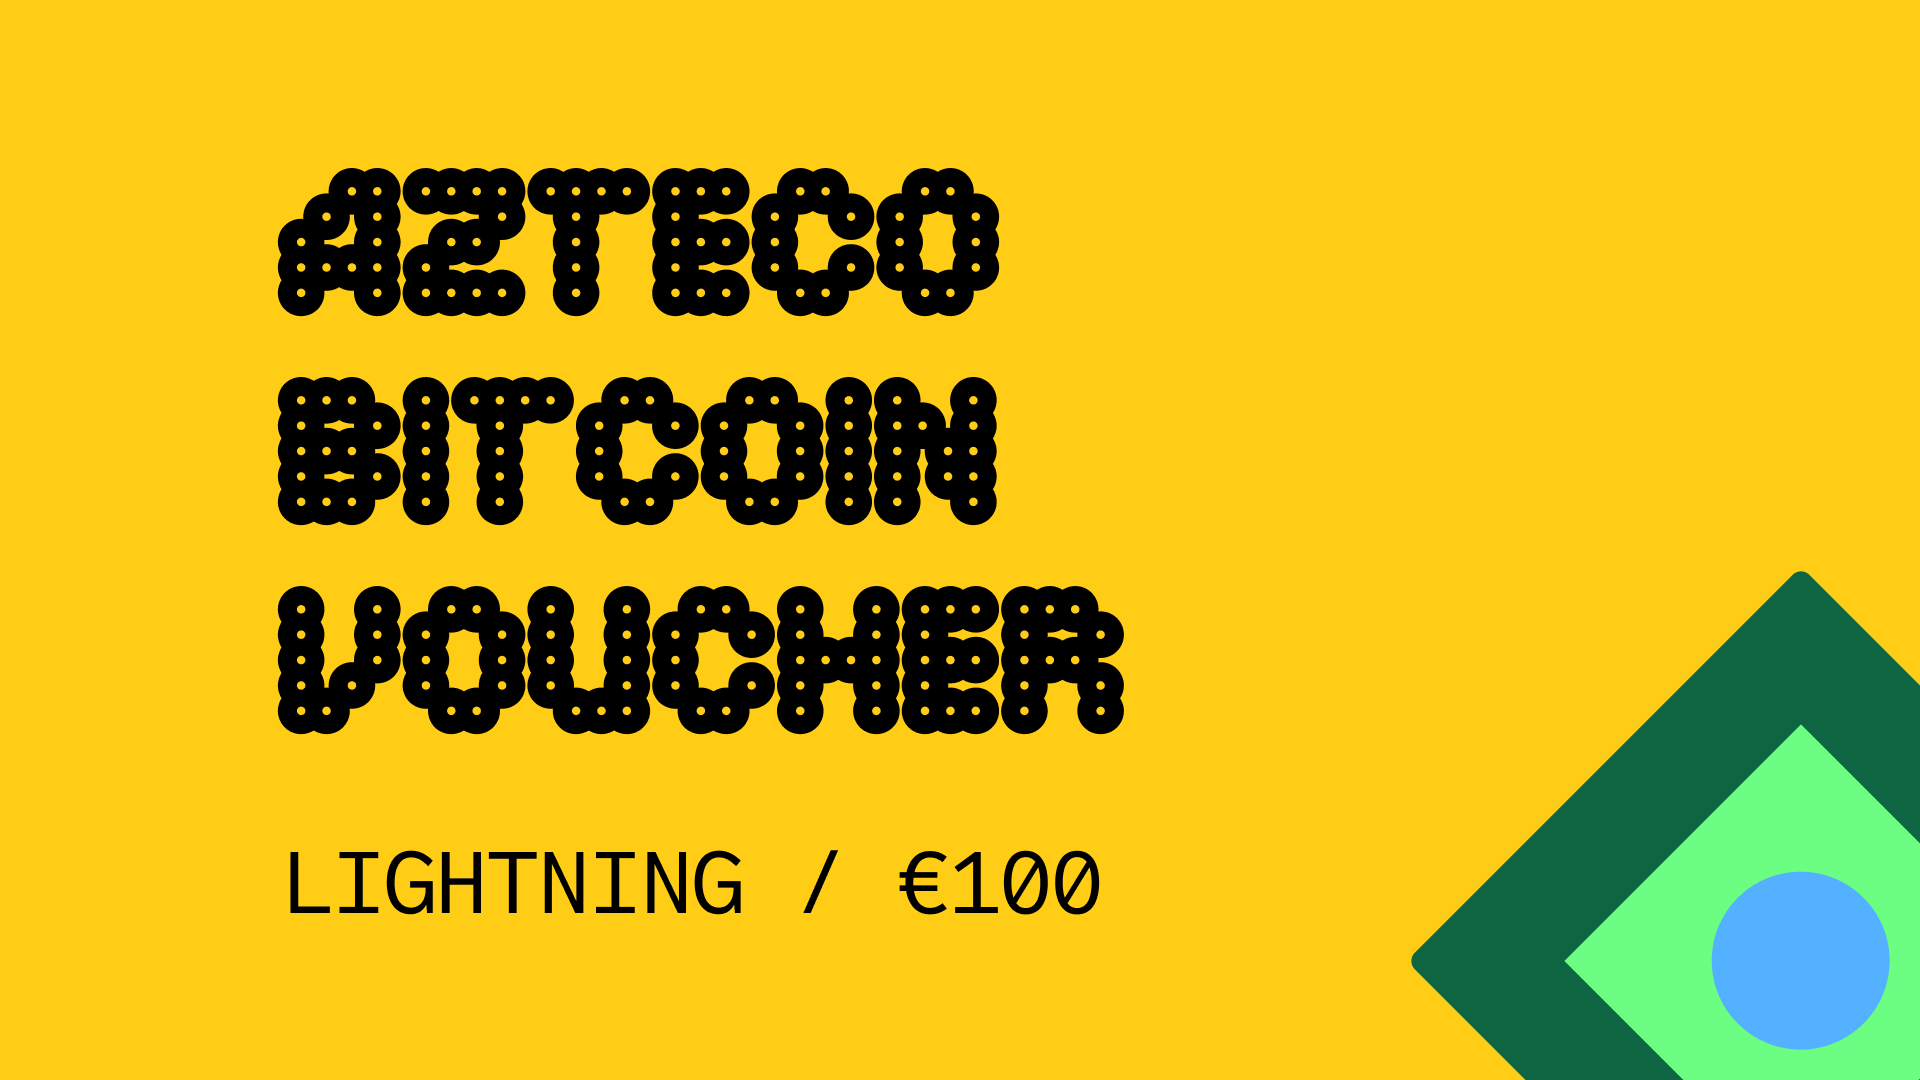 Azteco Bitcoin Lighting €100 Voucher [USD 112.98]